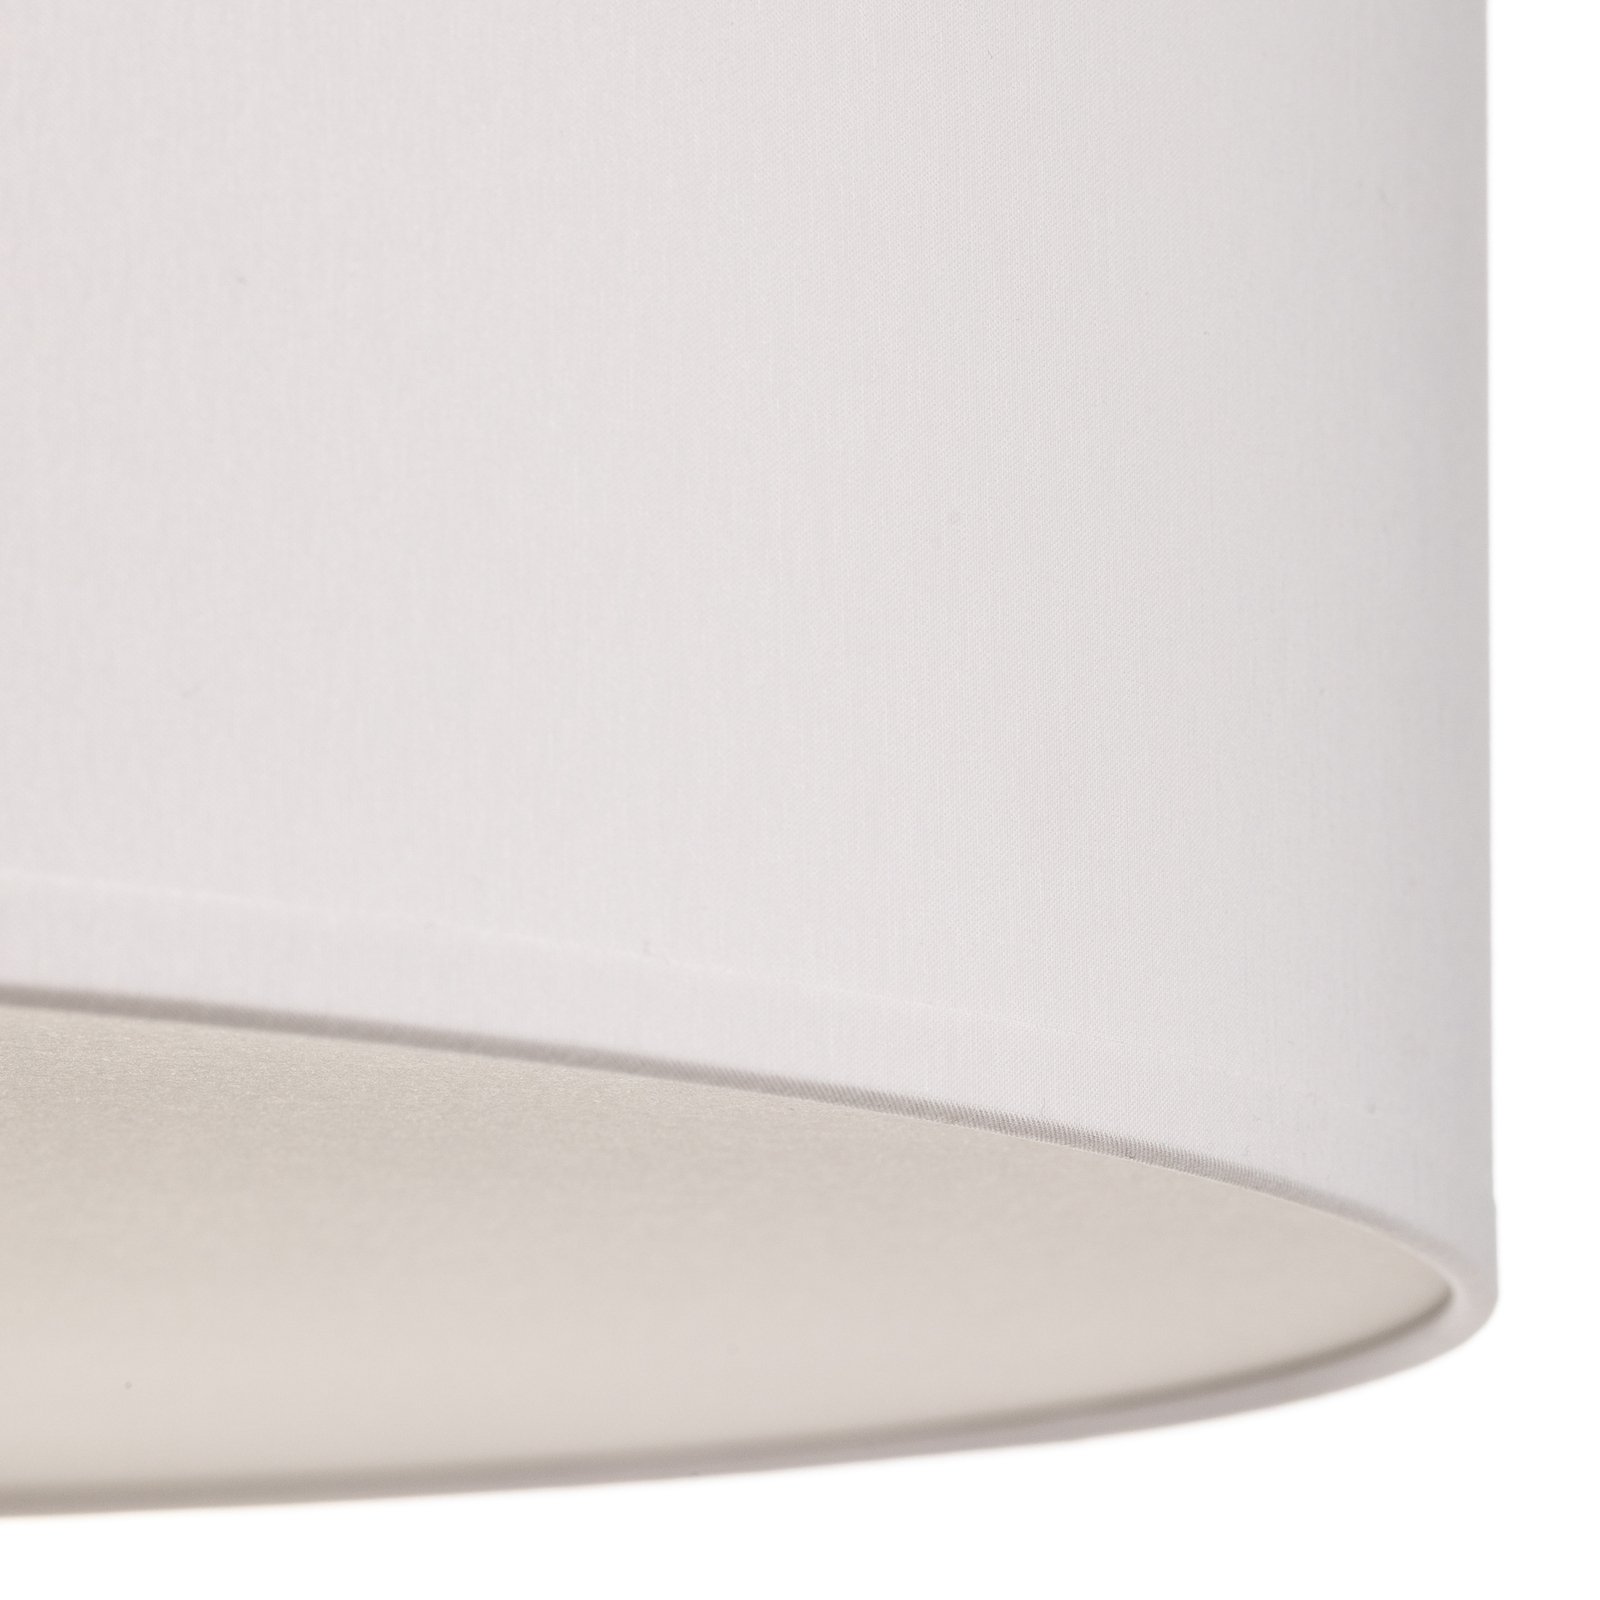 Fialové stropné svietidlo s dištančným rámčekom, biele